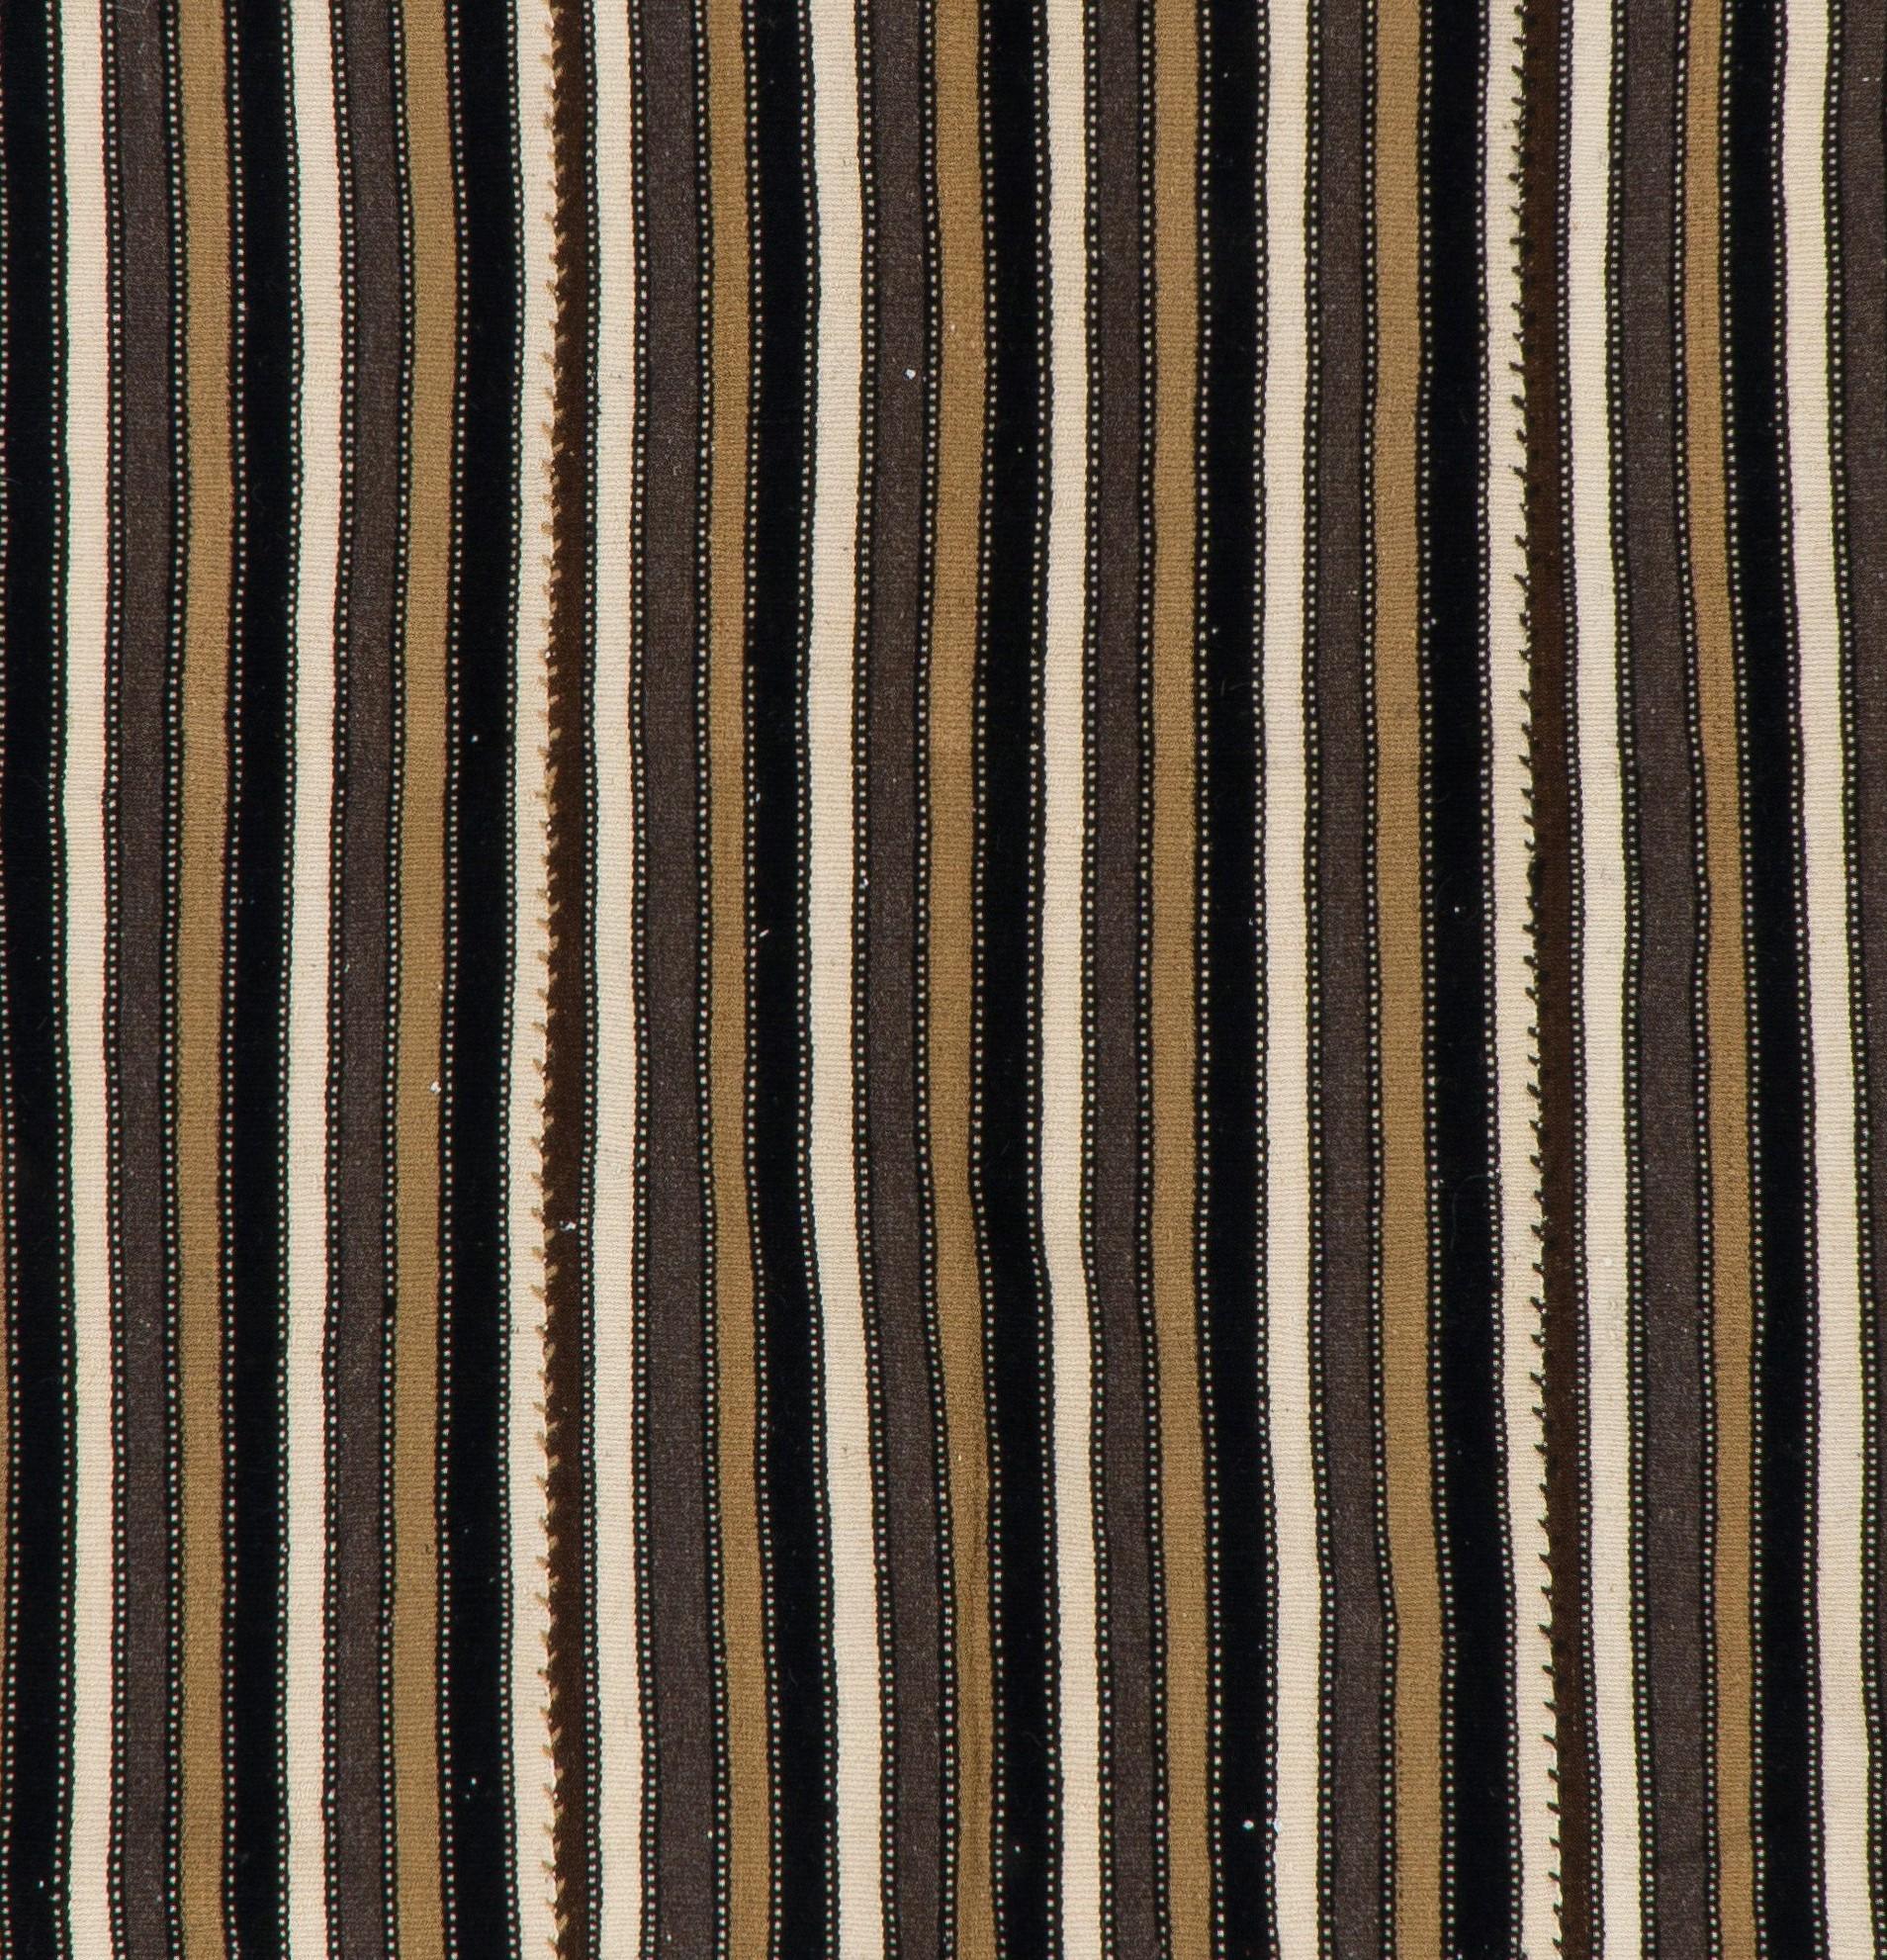 Turkish 5.6x8 Ft Hand-Woven Striped Vintage Kilim. 100% Wool Flatweave Rug. Reversible